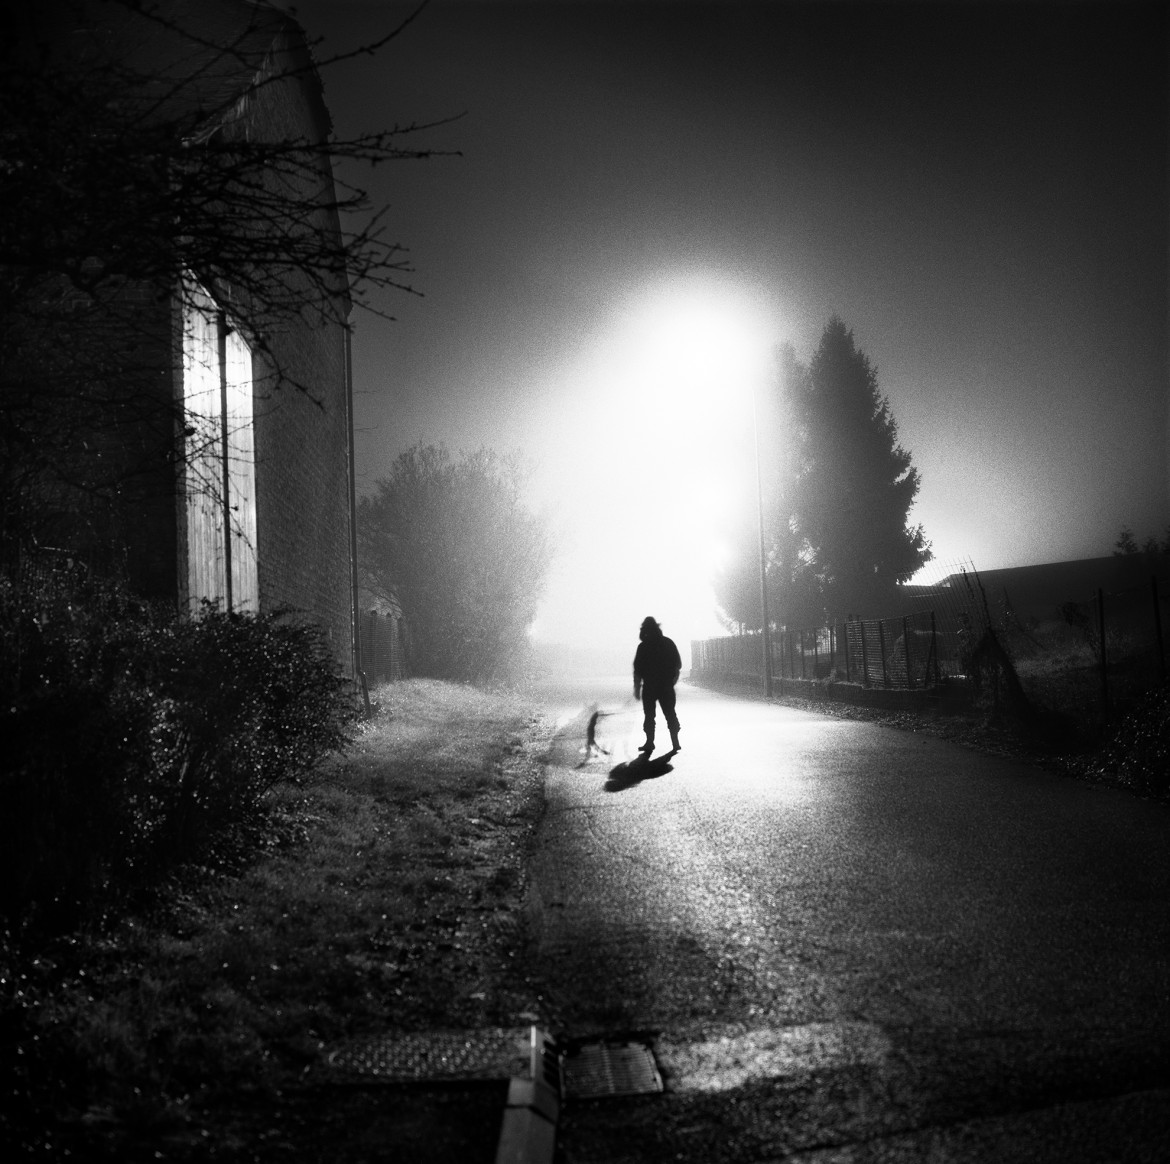 Walking at night, I stumble on odd apparitions